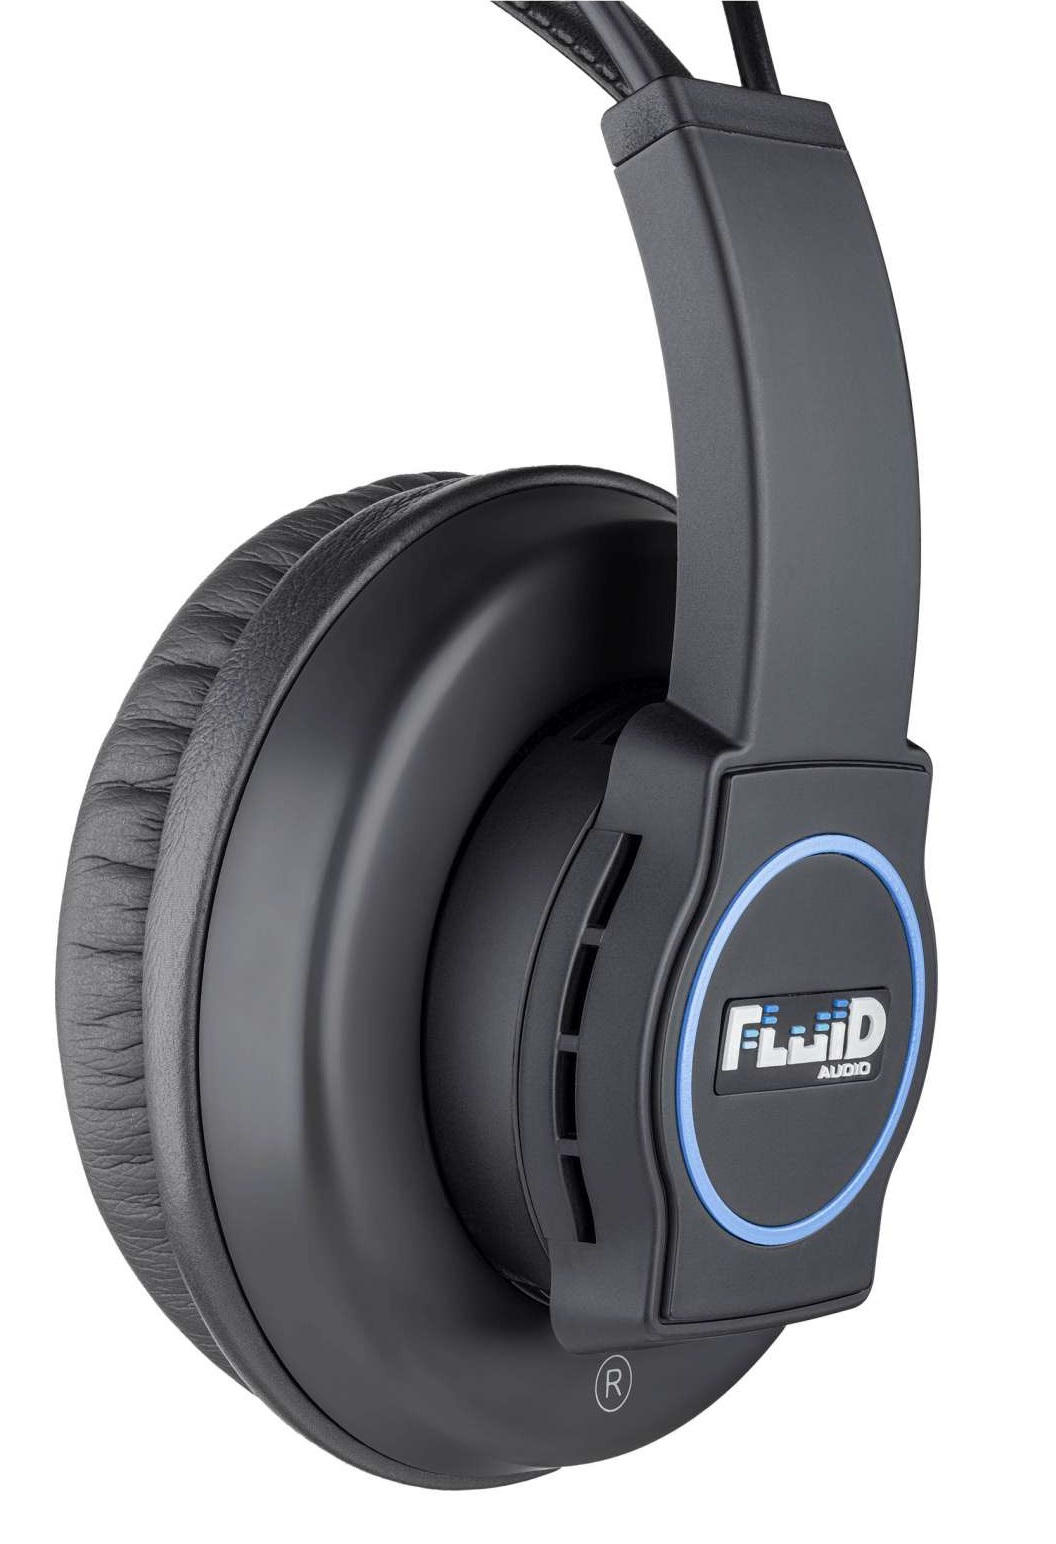 Fluid Audio Focus - Closed headset - Variation 2